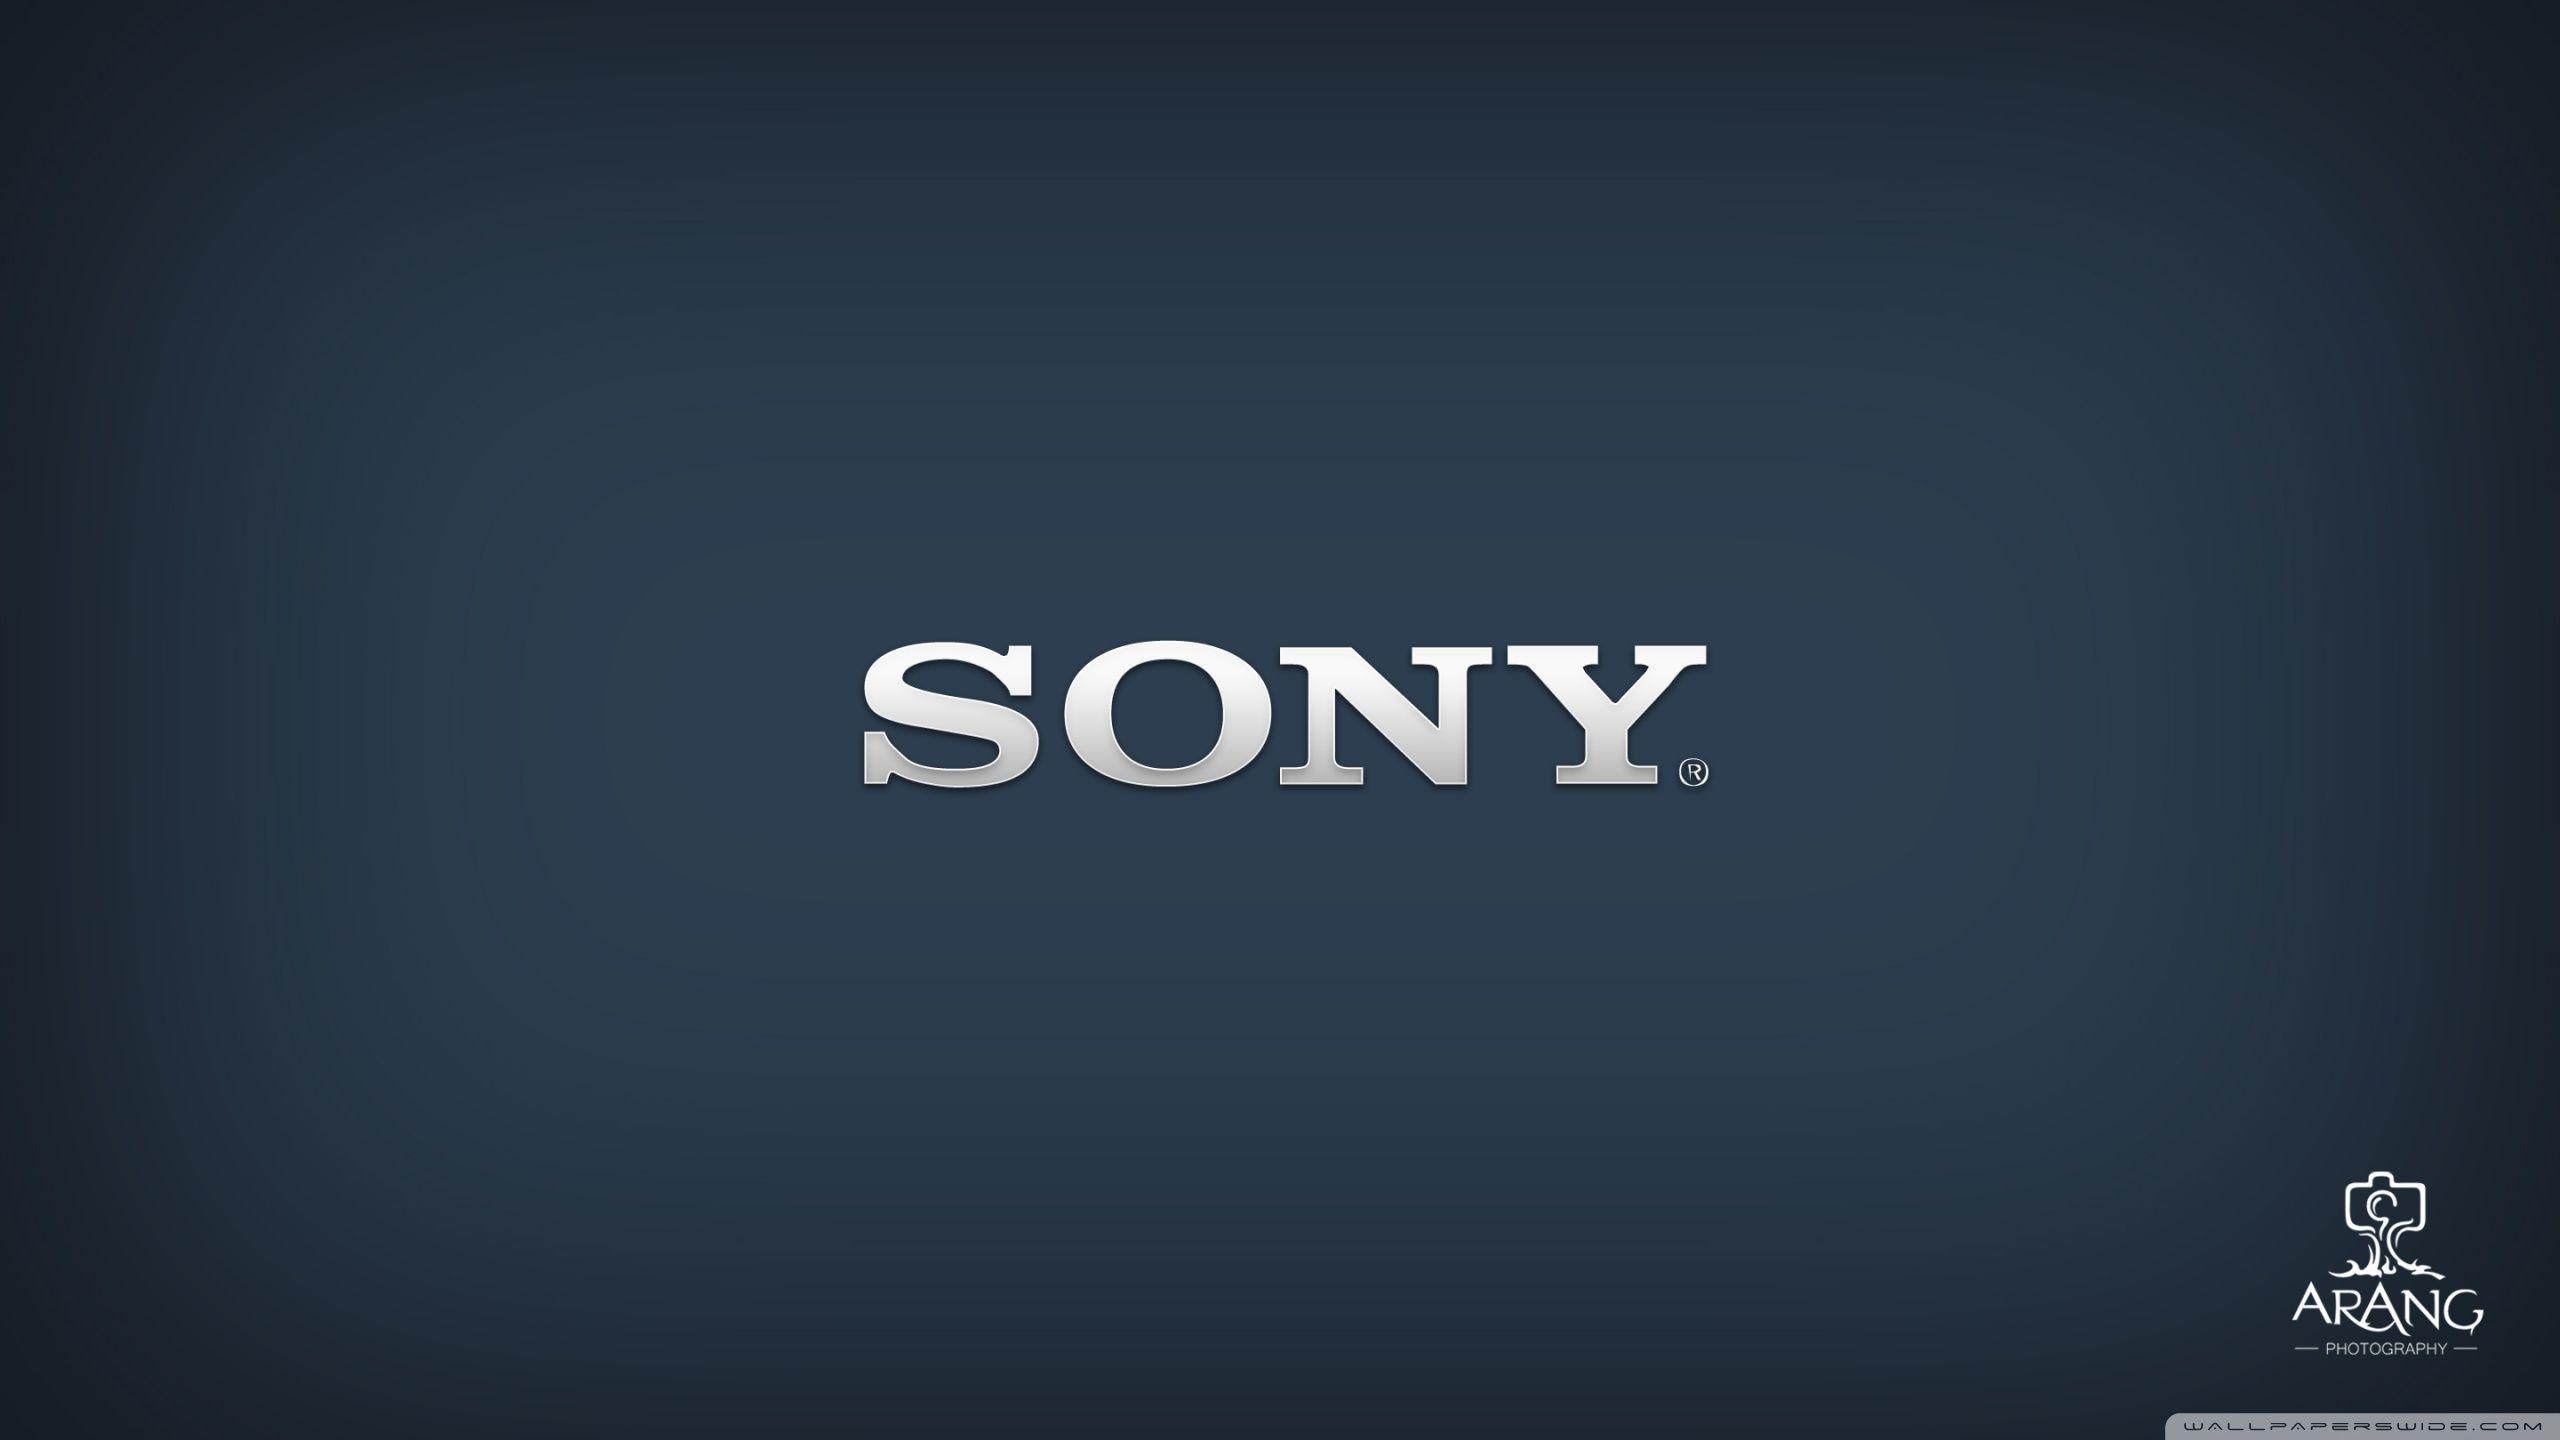 Sony Logo 2014 HD desktop wallpaper, High Definition